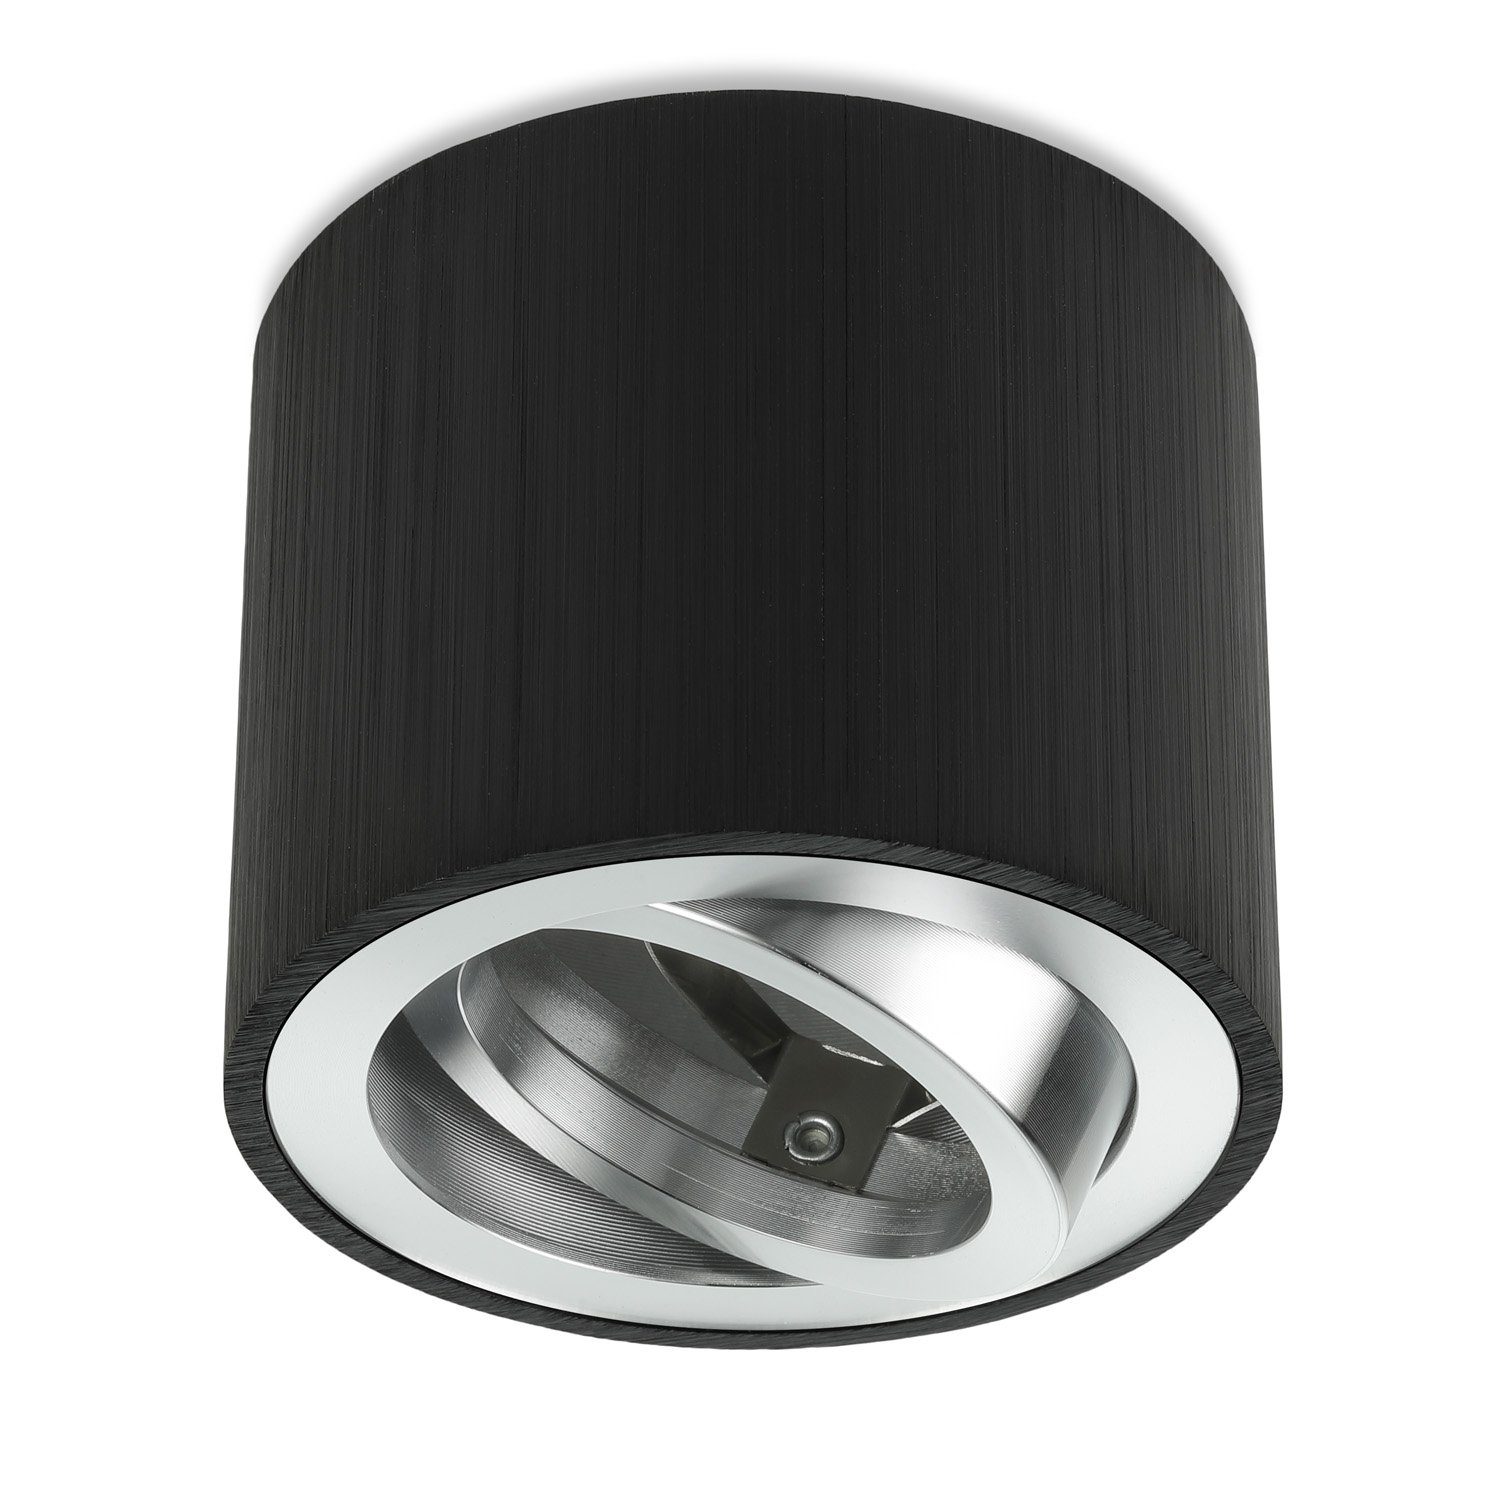 Sweet LED Aufbauleuchte flach Aluminium schwarz chrom deckenspot schwenkbar, ohne Leuchtmittel, Aufbaustrahler LED, Aufbauspot